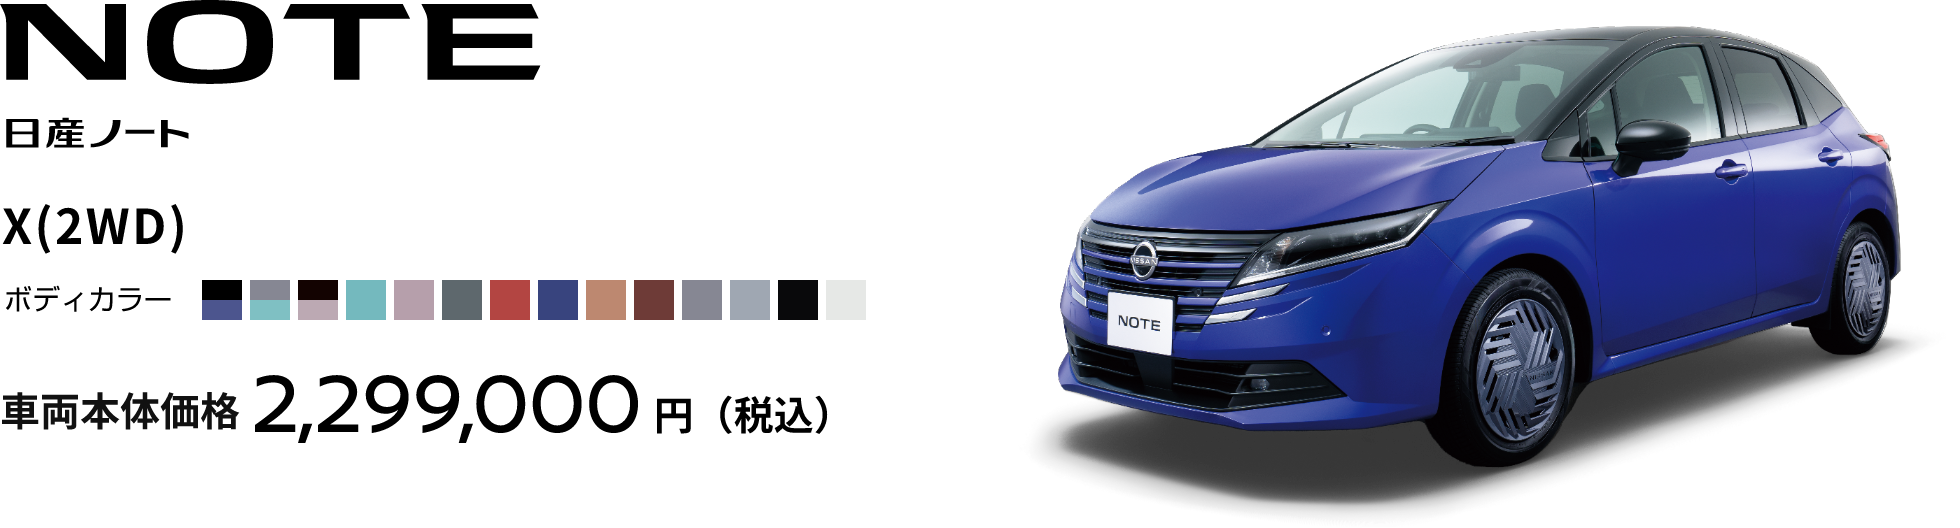 NOTE 日産ノートX(2WD)車両本体価格2,299,000円(税込)